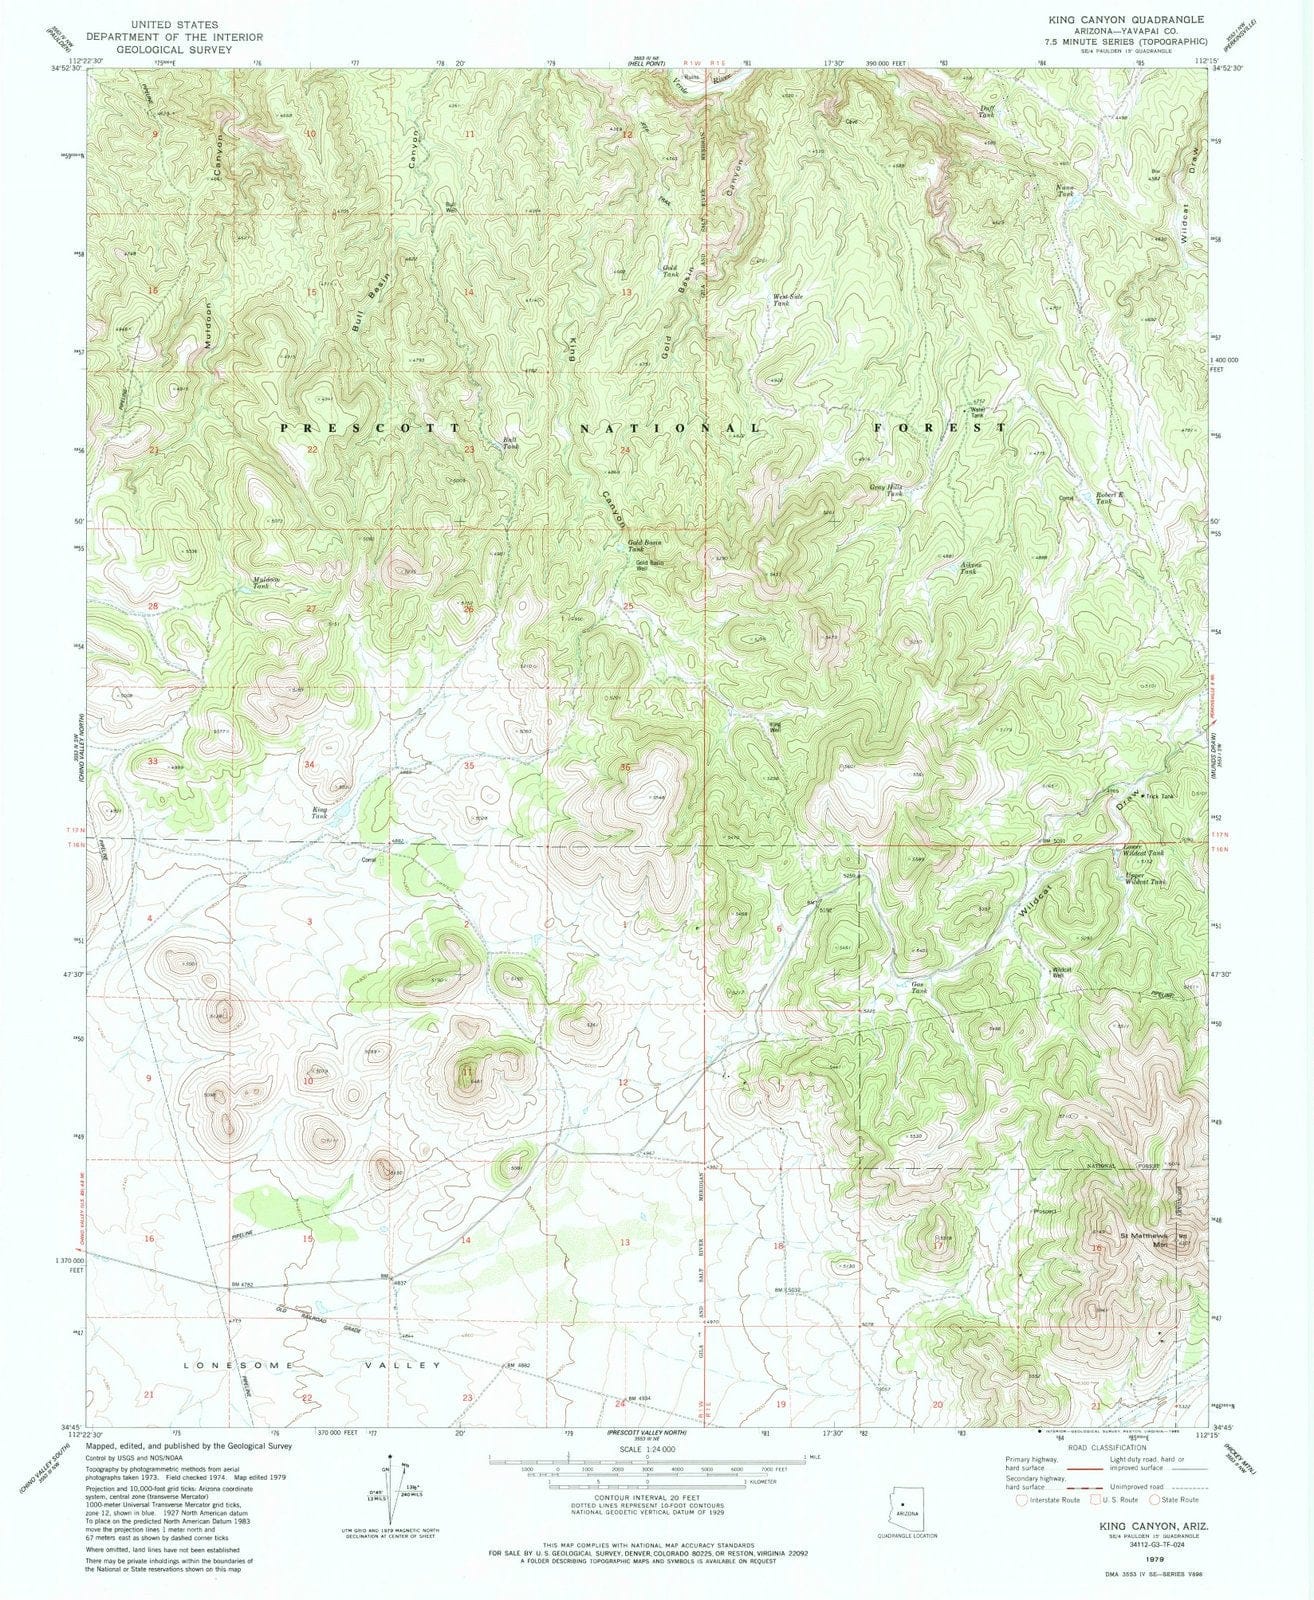 1979 King Canyon, AZ - Arizona - USGS Topographic Map